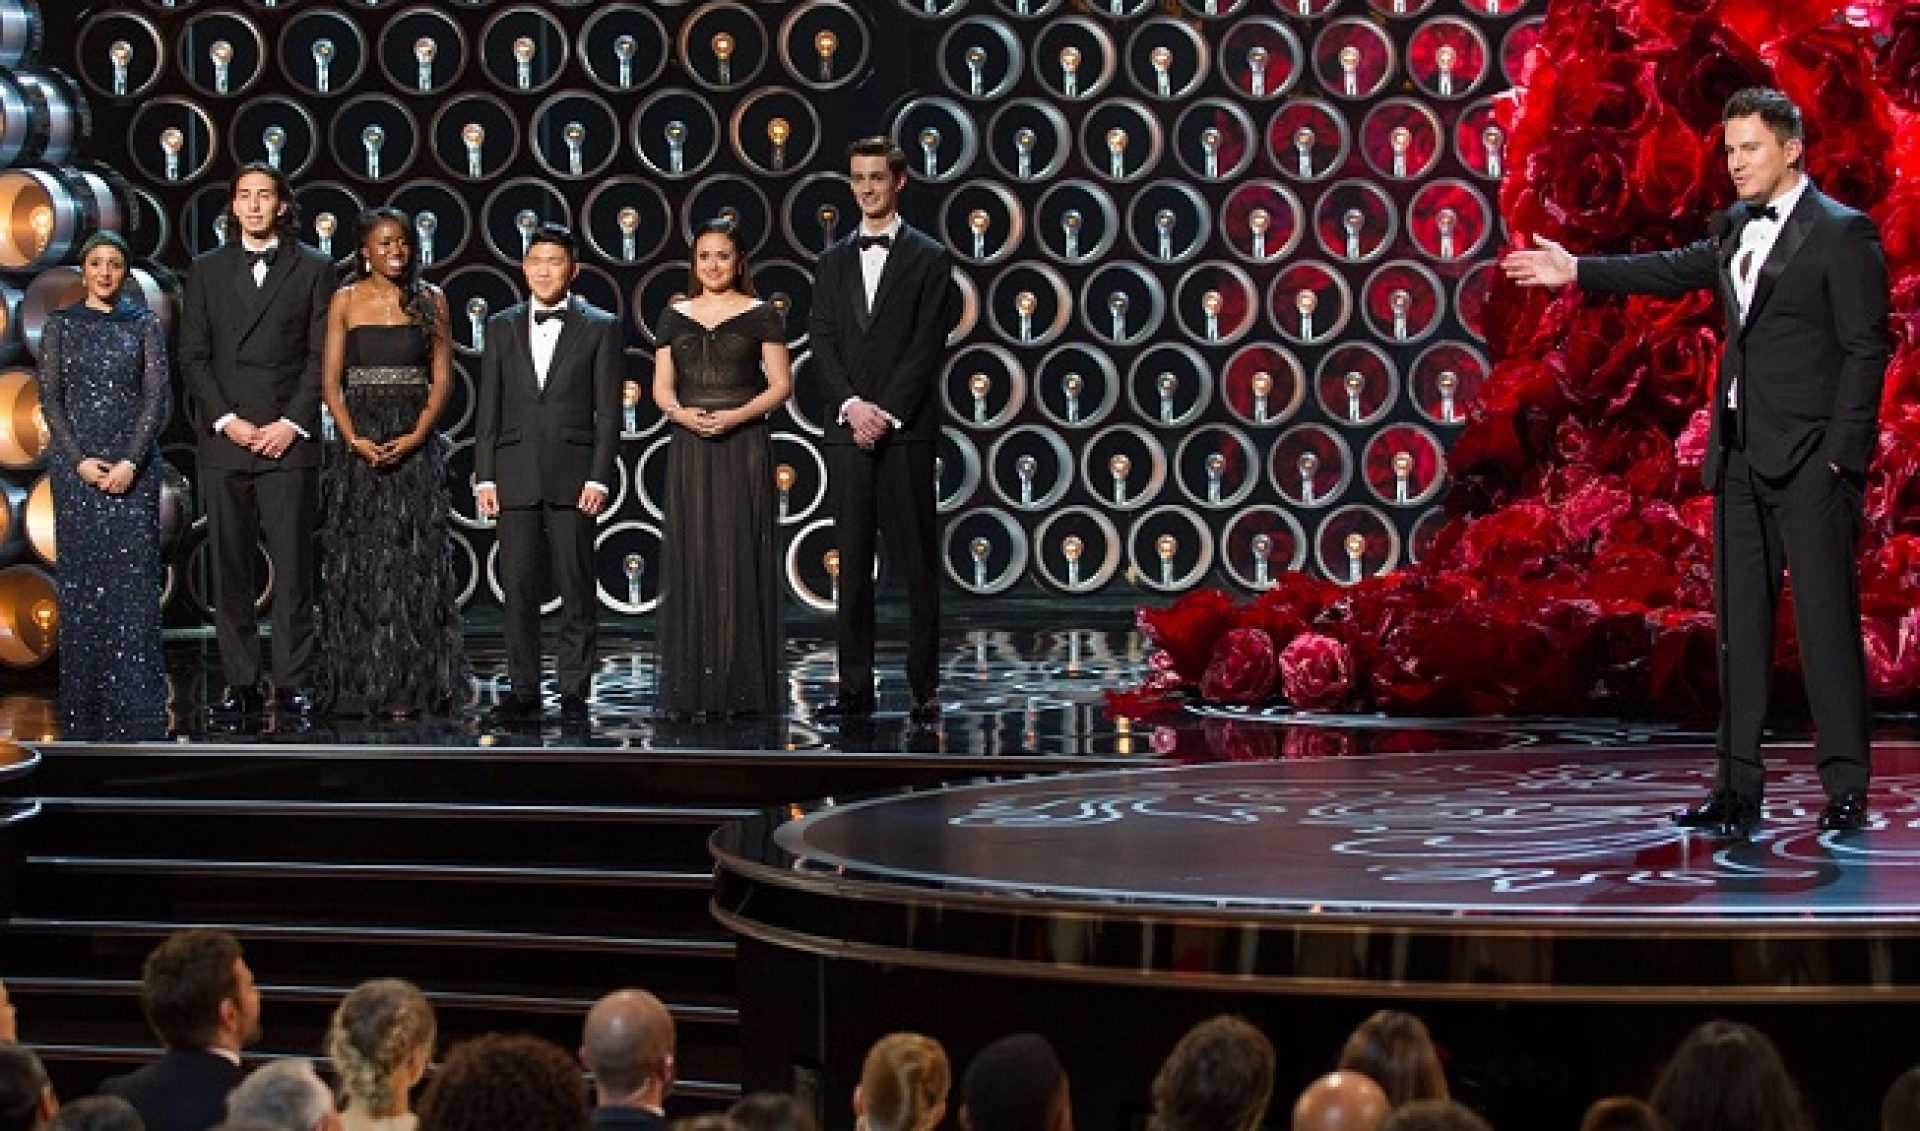 Channing Tatum, Academy Awards Host “Team Oscar” Video Contest